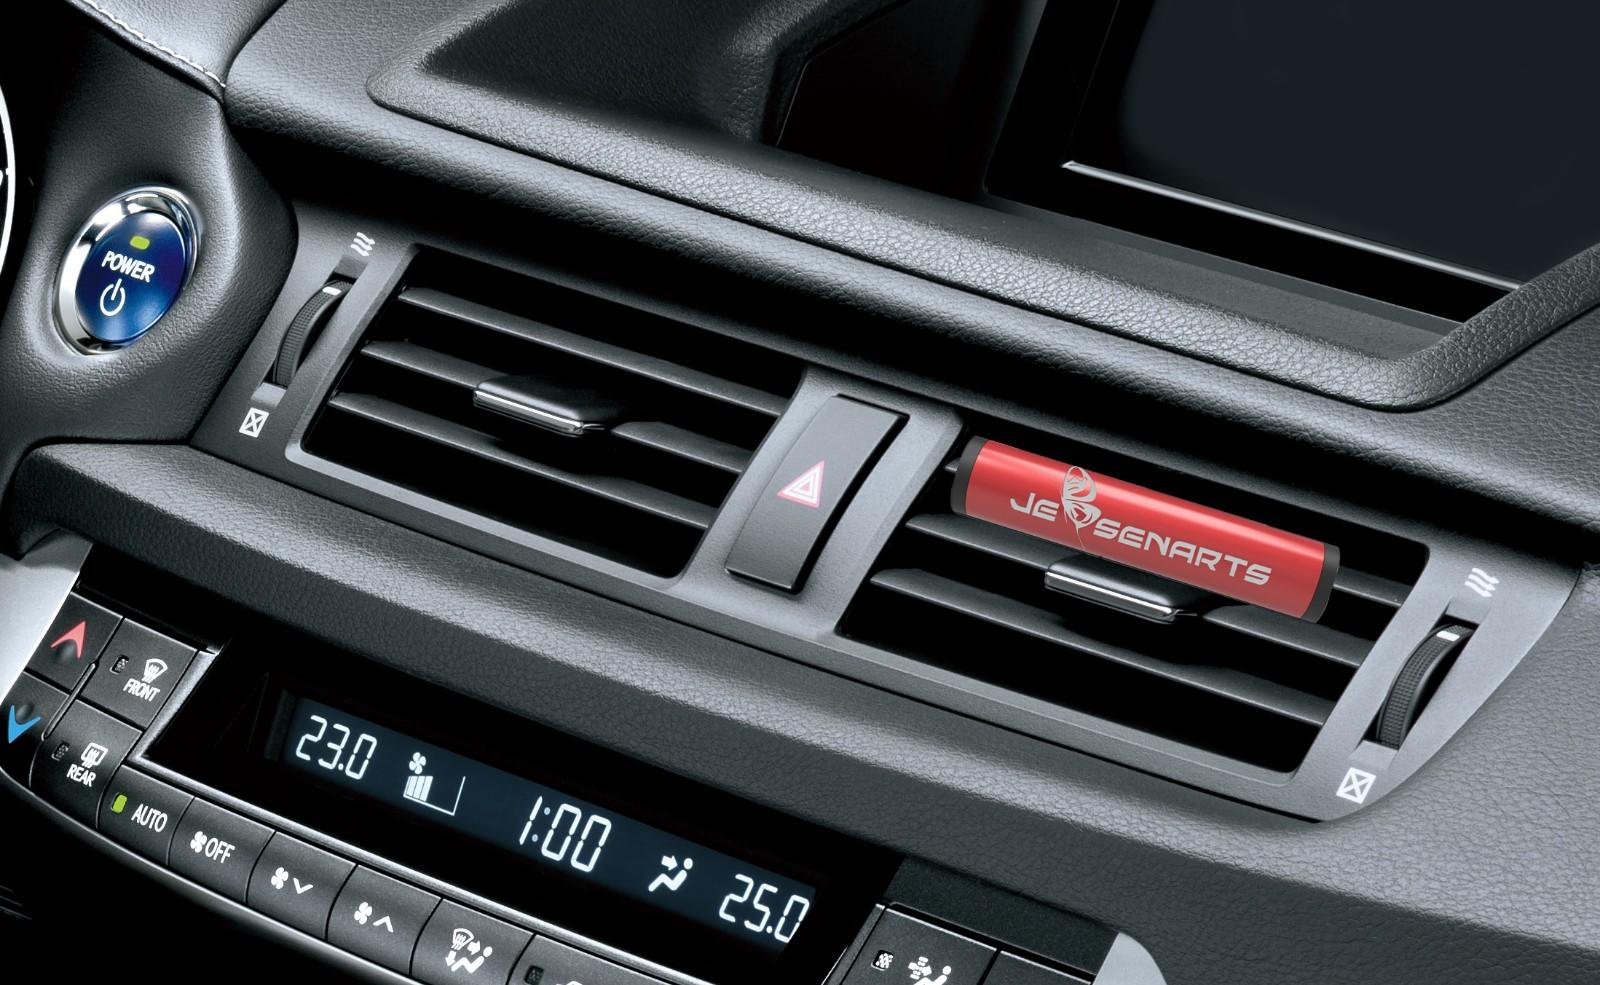 JEBSEN ARTS vehicle car air freshener vent clip sticker for car